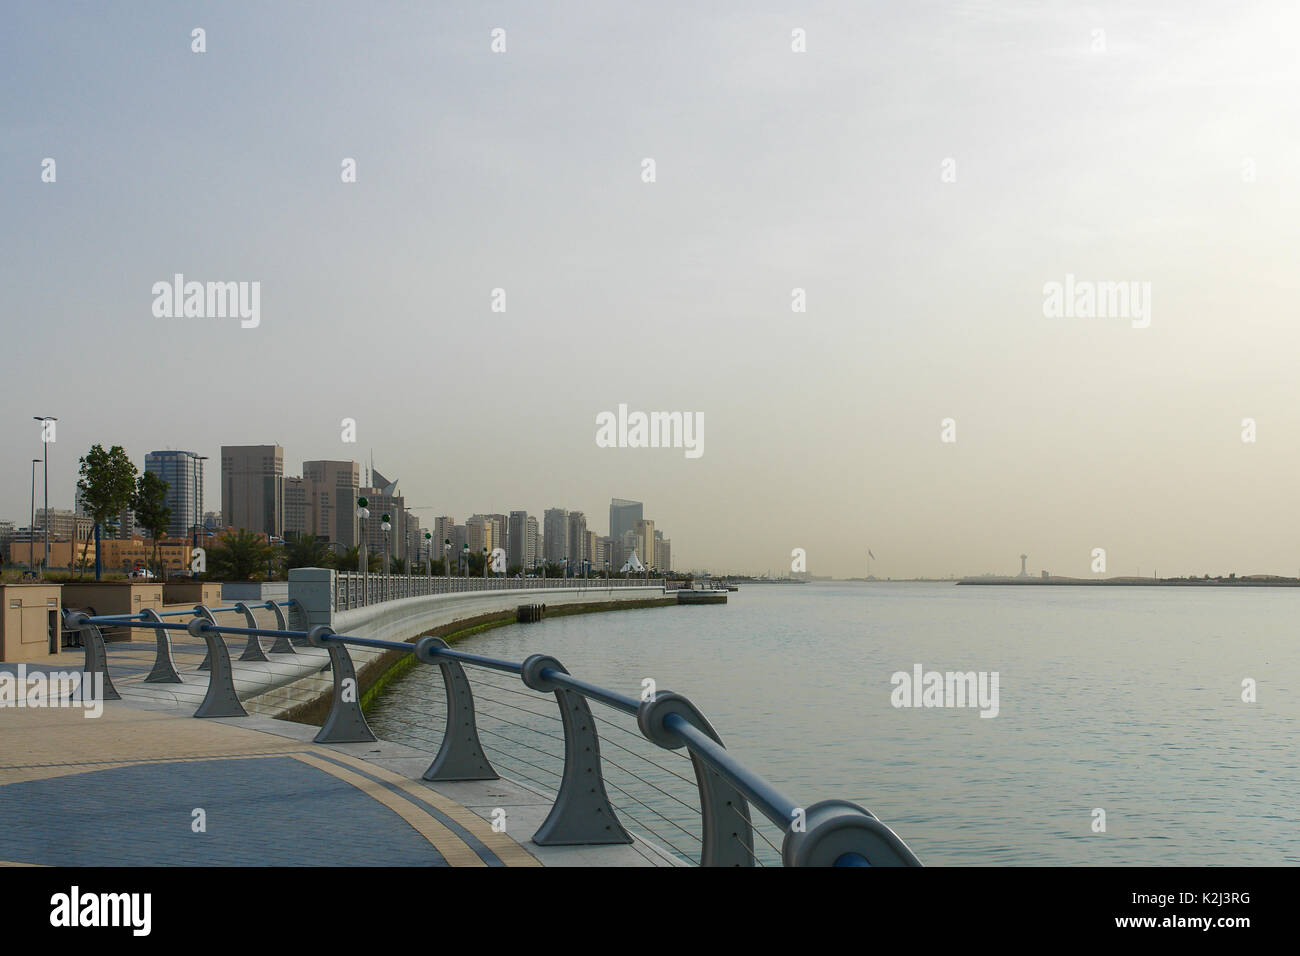 Abu Dhabi Szenen Stockfoto